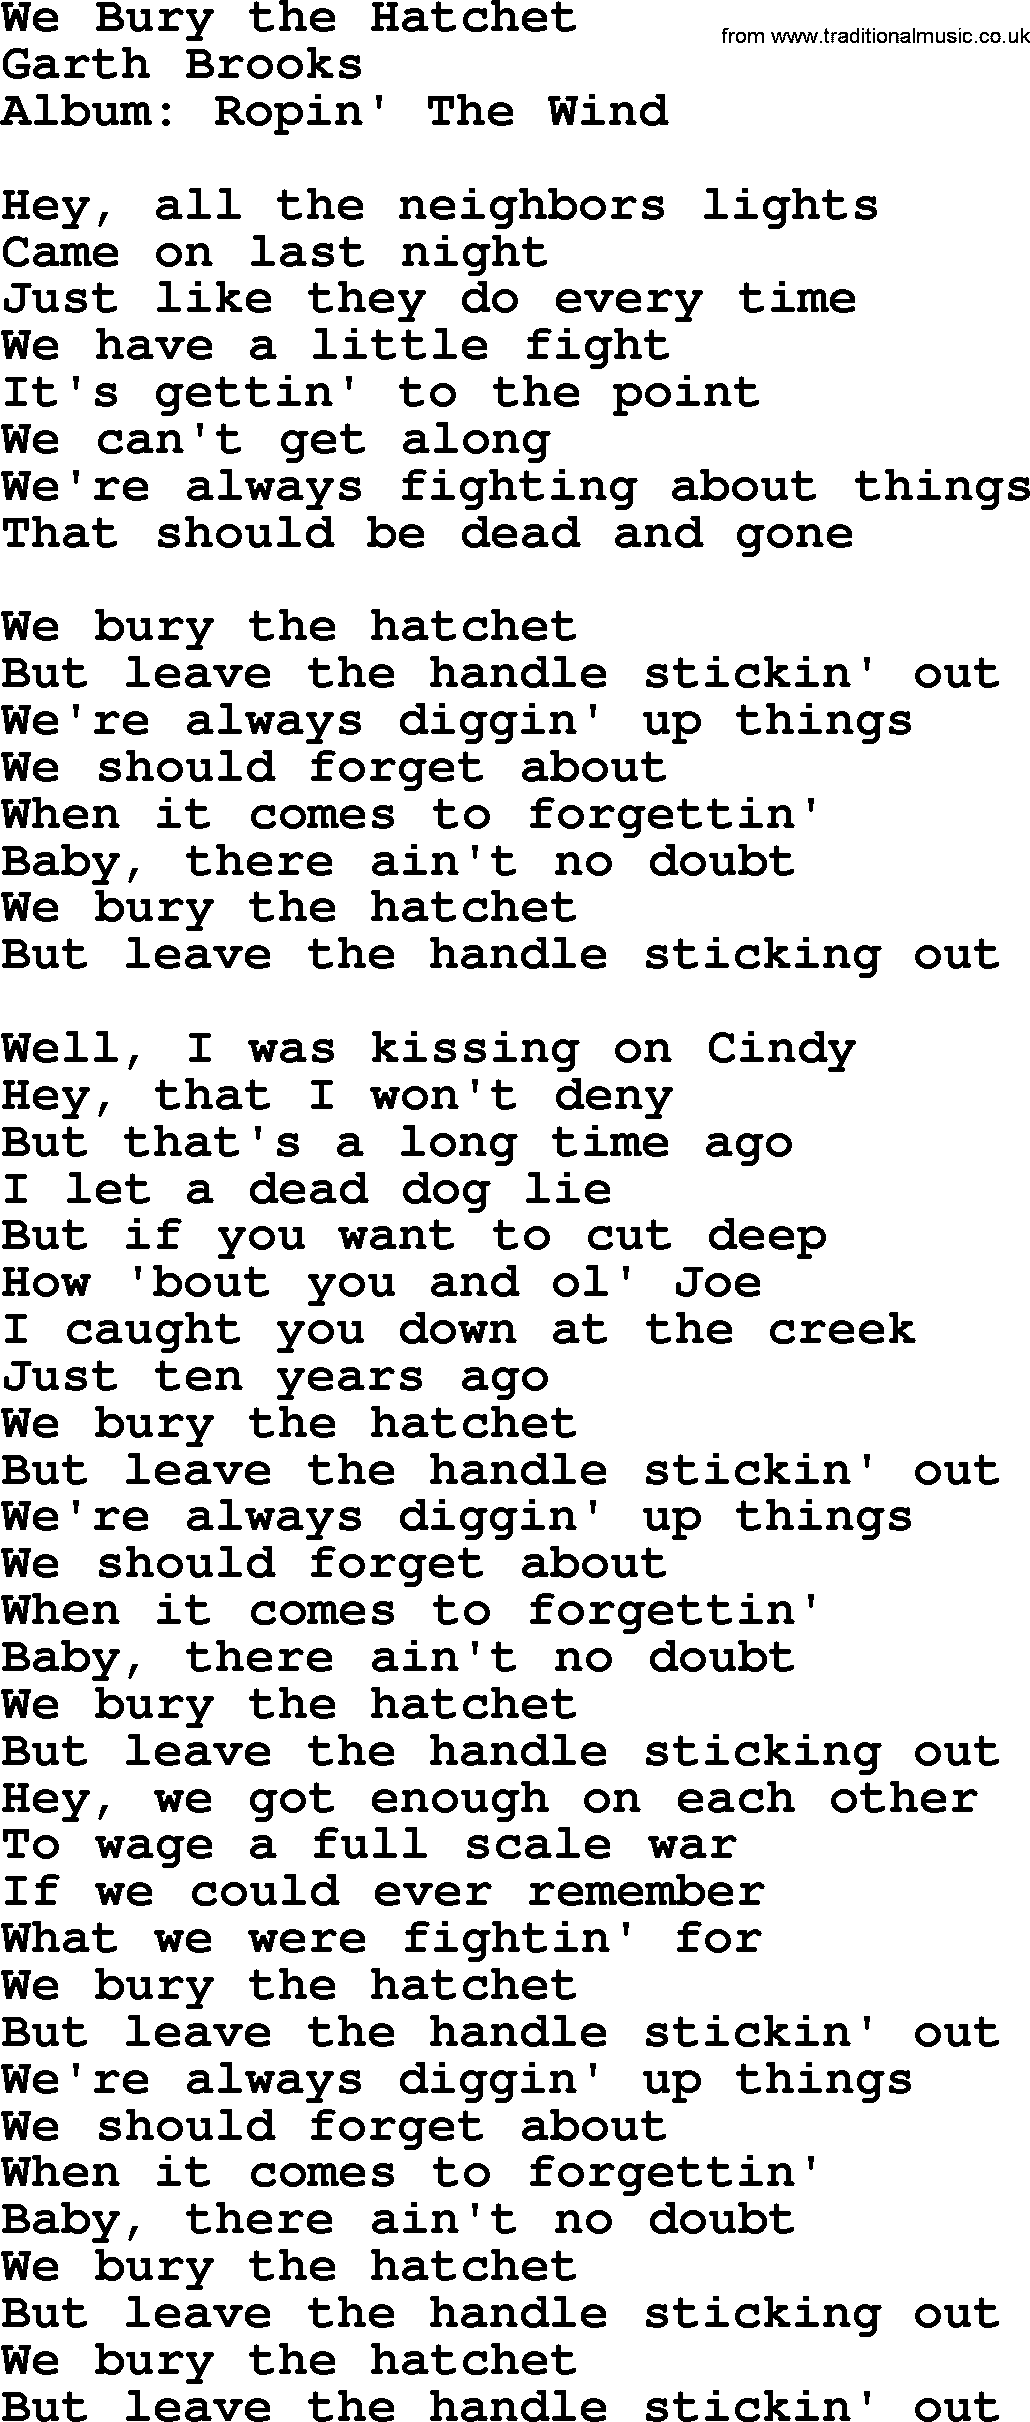 Garth Brooks song: We Bury The Hatchet, lyrics